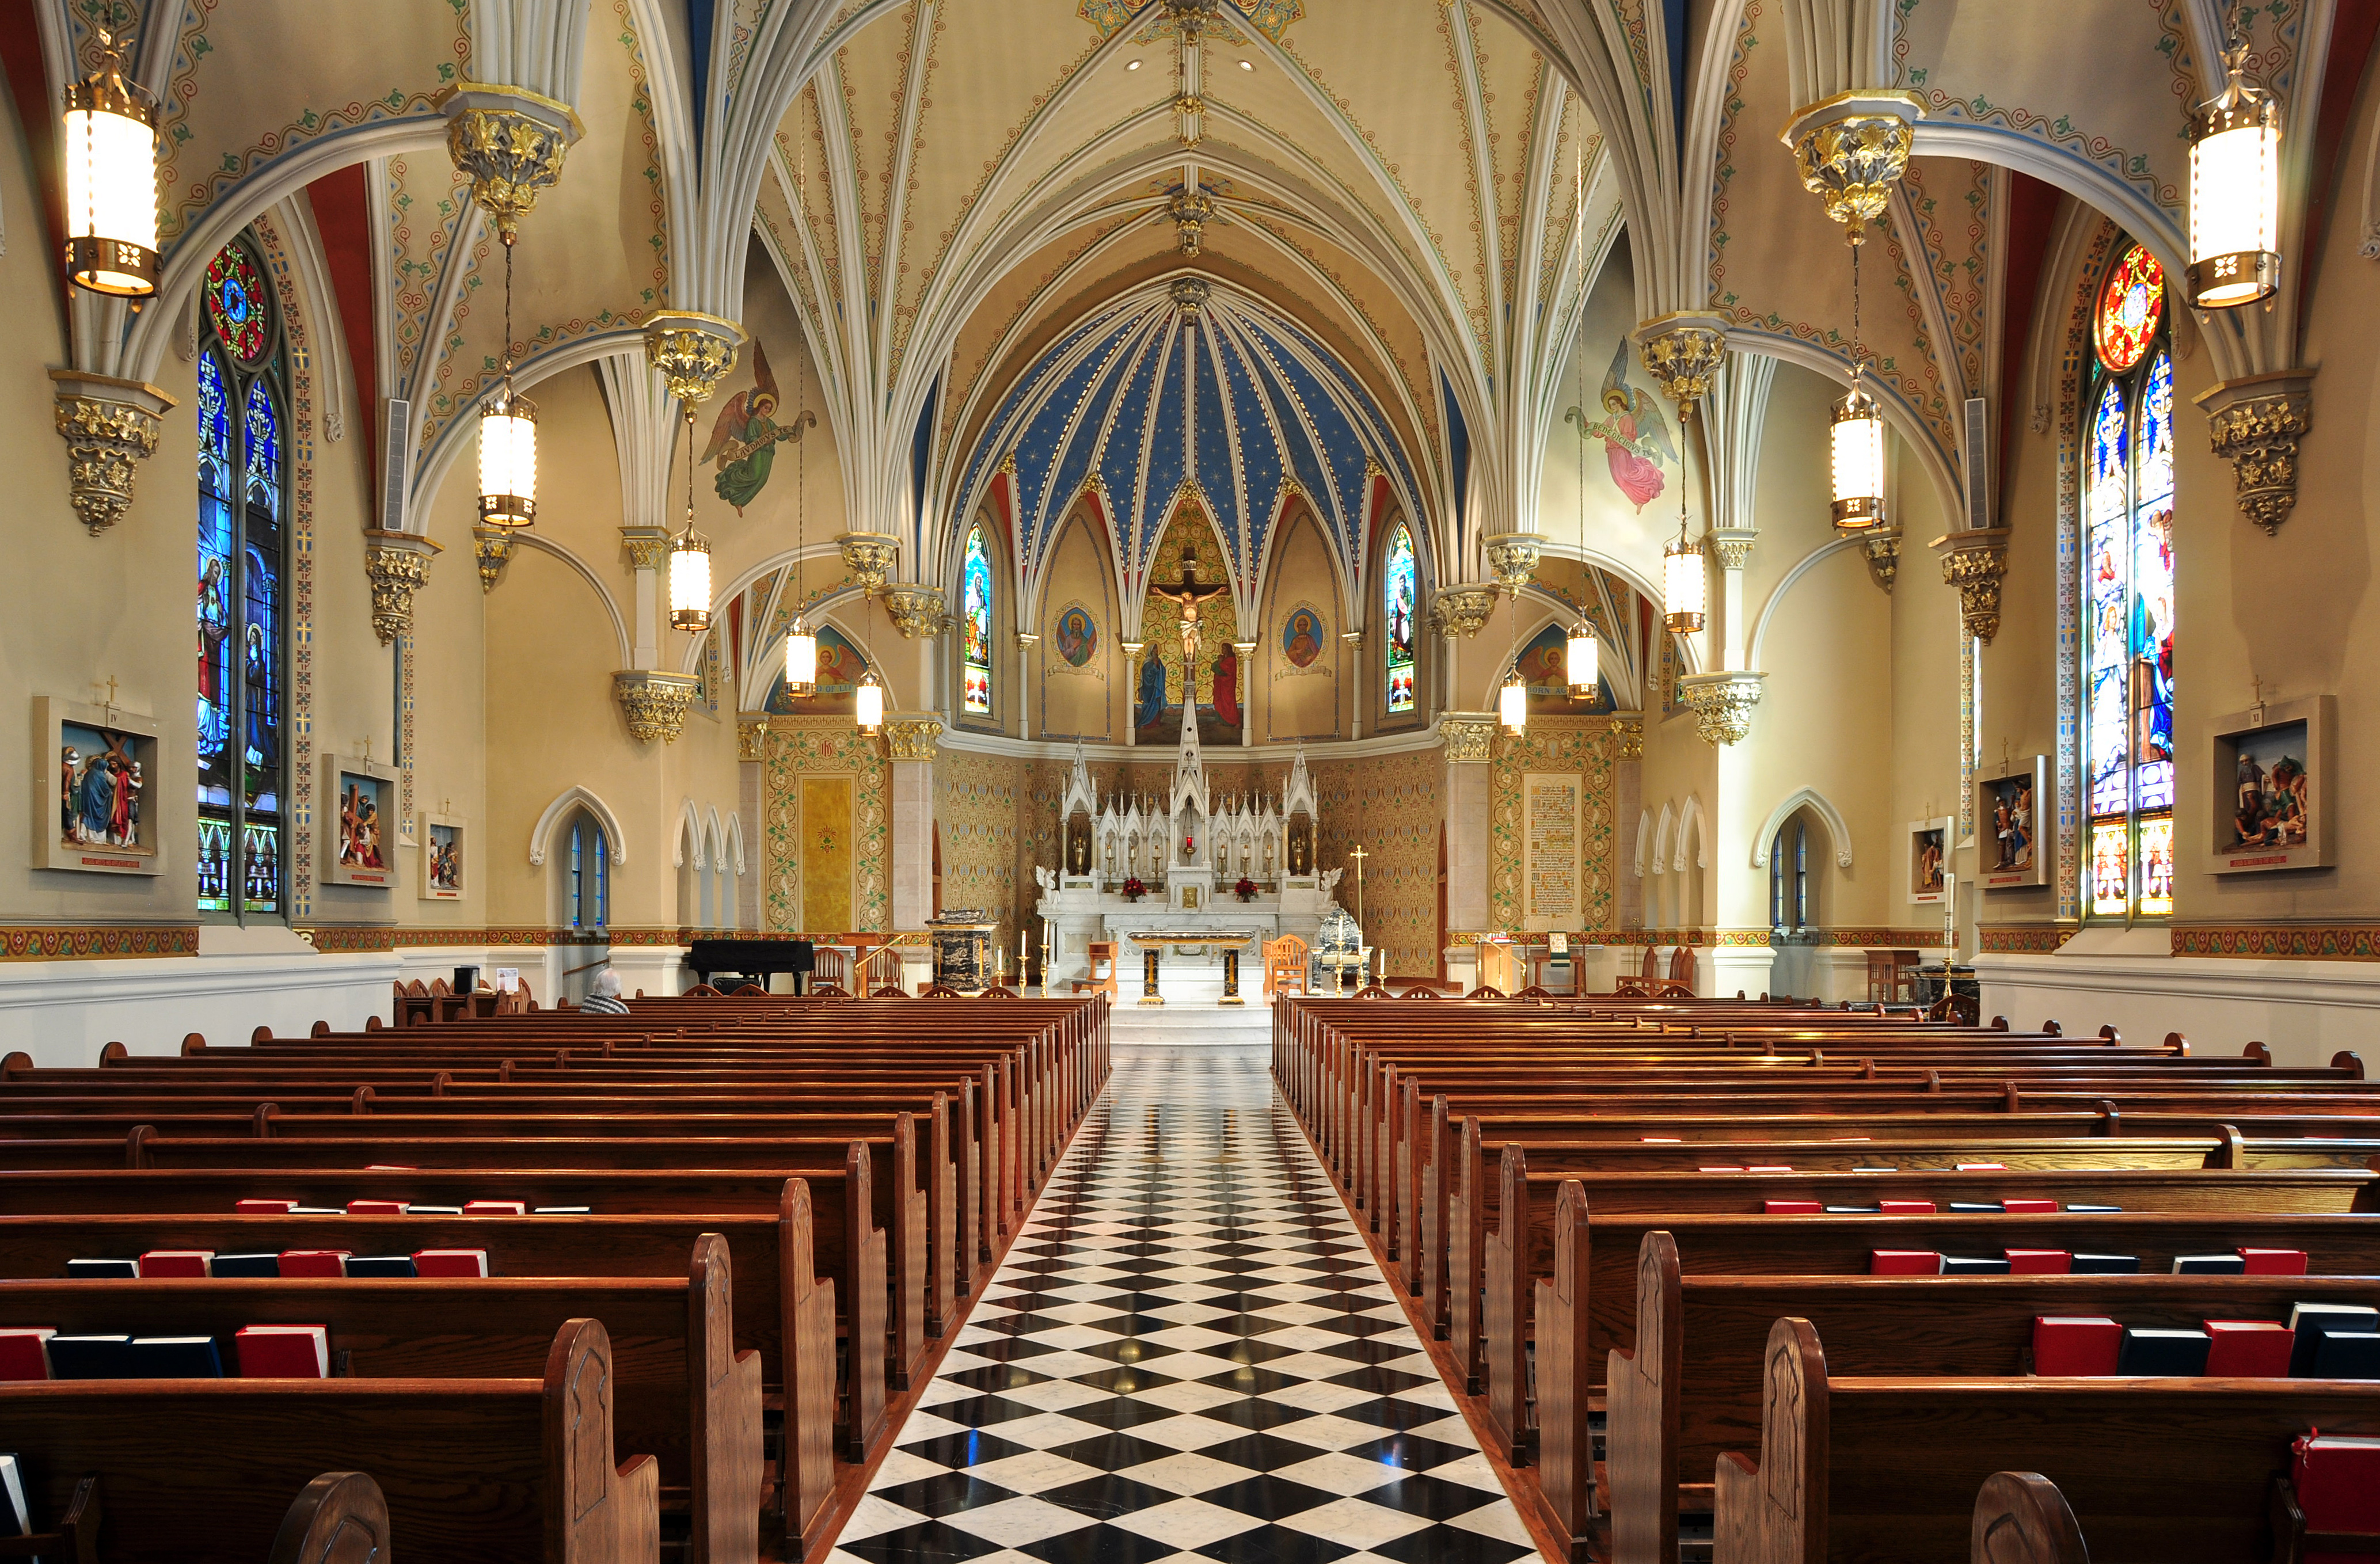 Interior of St Andrew's Catholic Church in Roanoke, Virginia